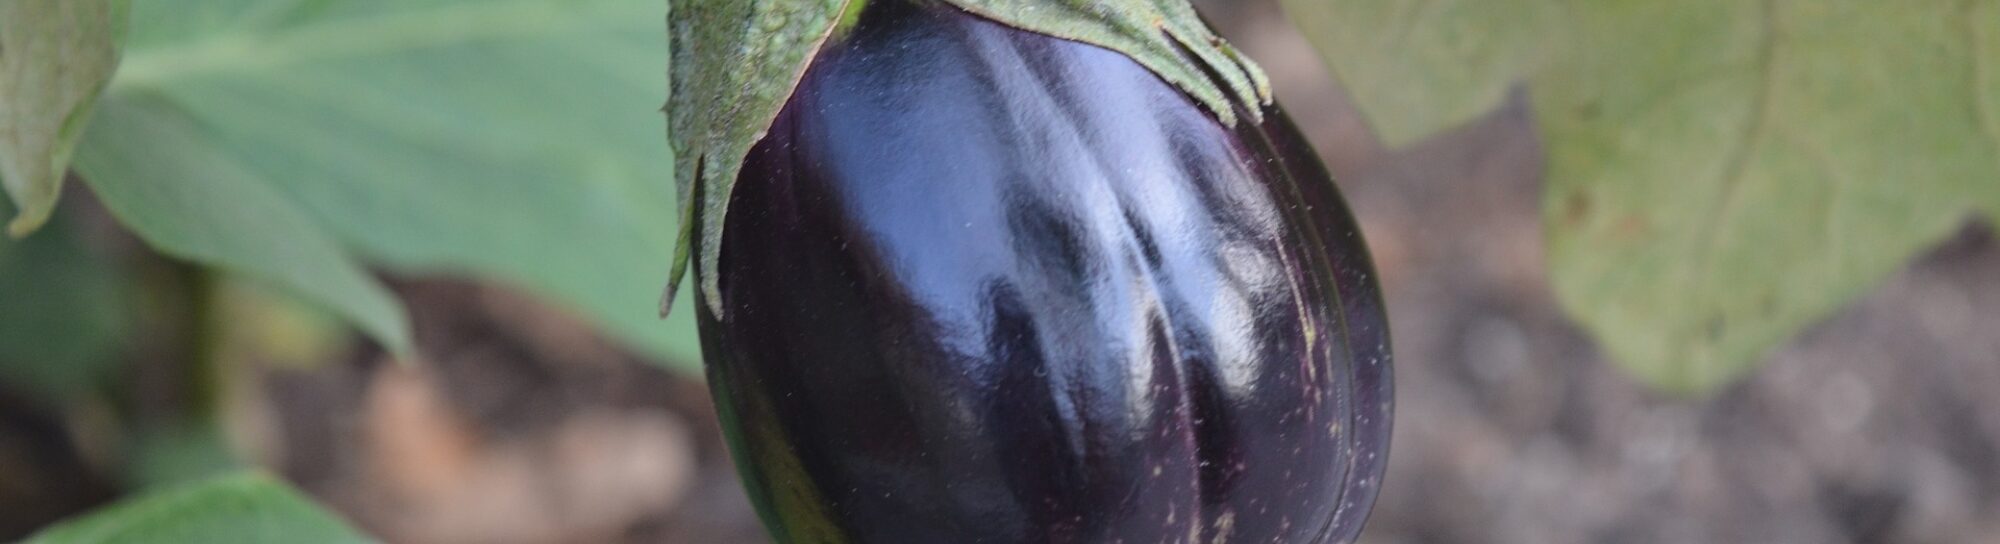 Healthy eggplants thanks to Bacillus thuringiensis